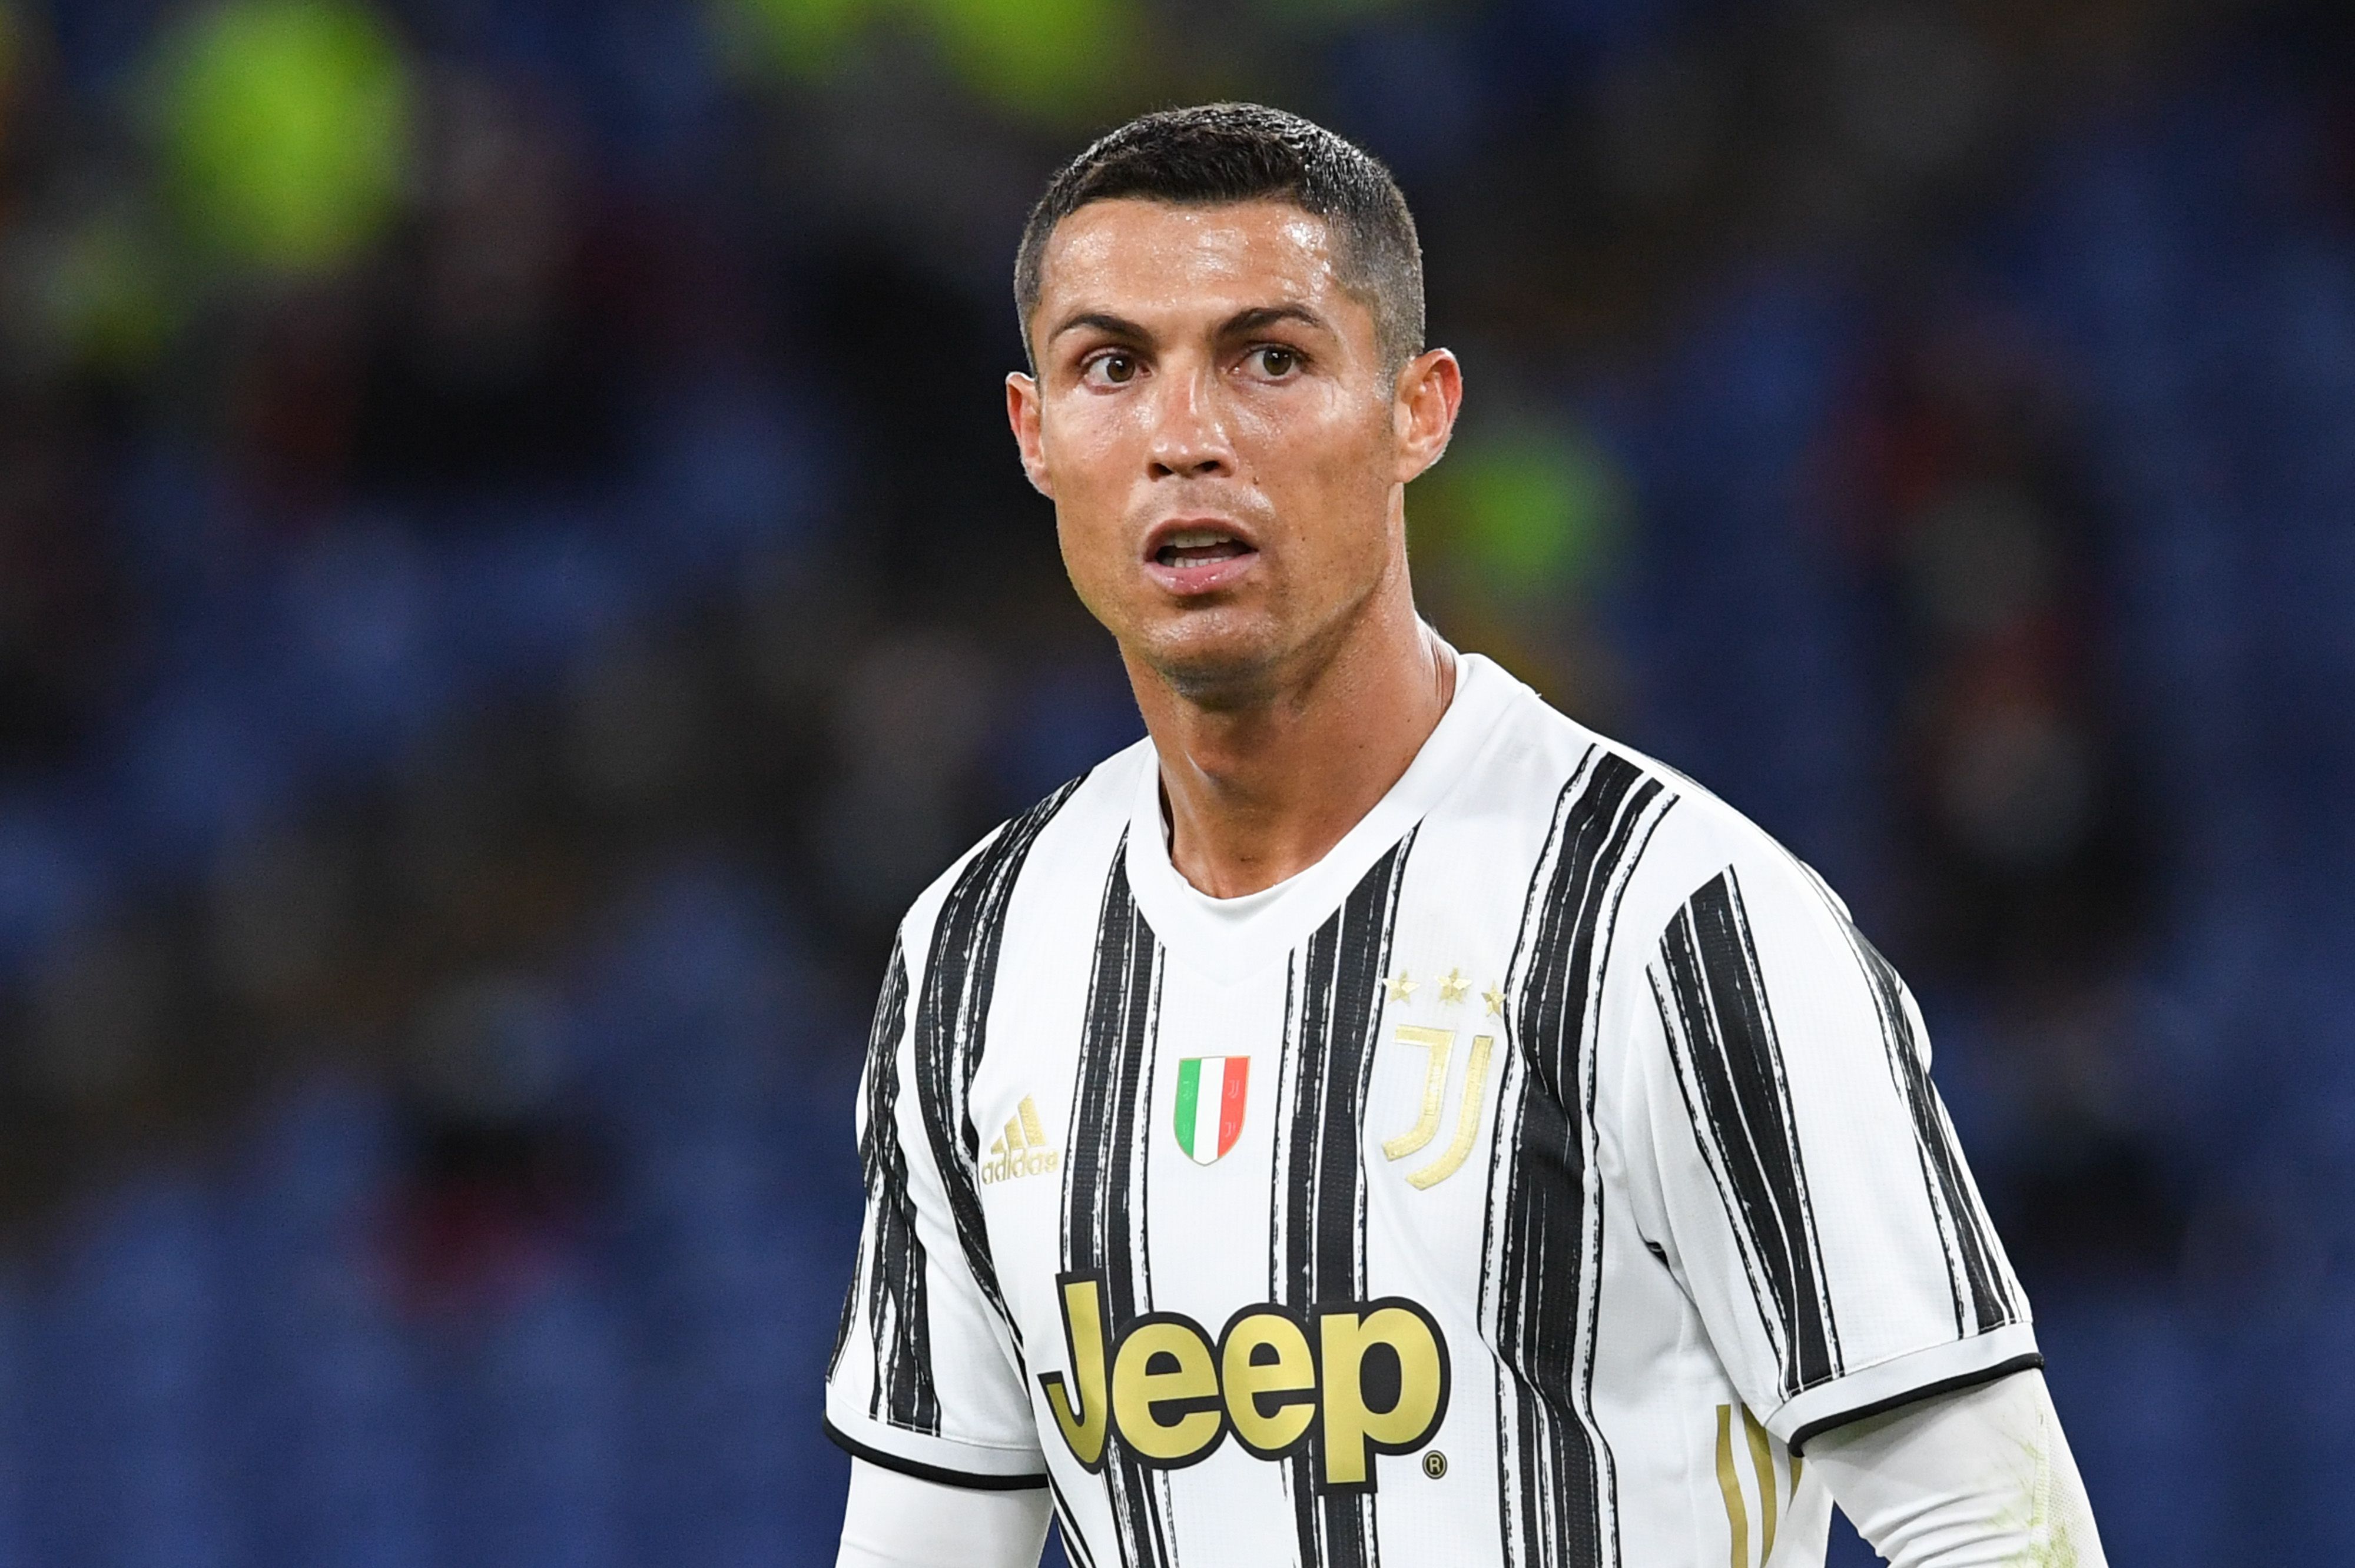 Cristiano Ronaldo could faceaccuser in court in Nevada following